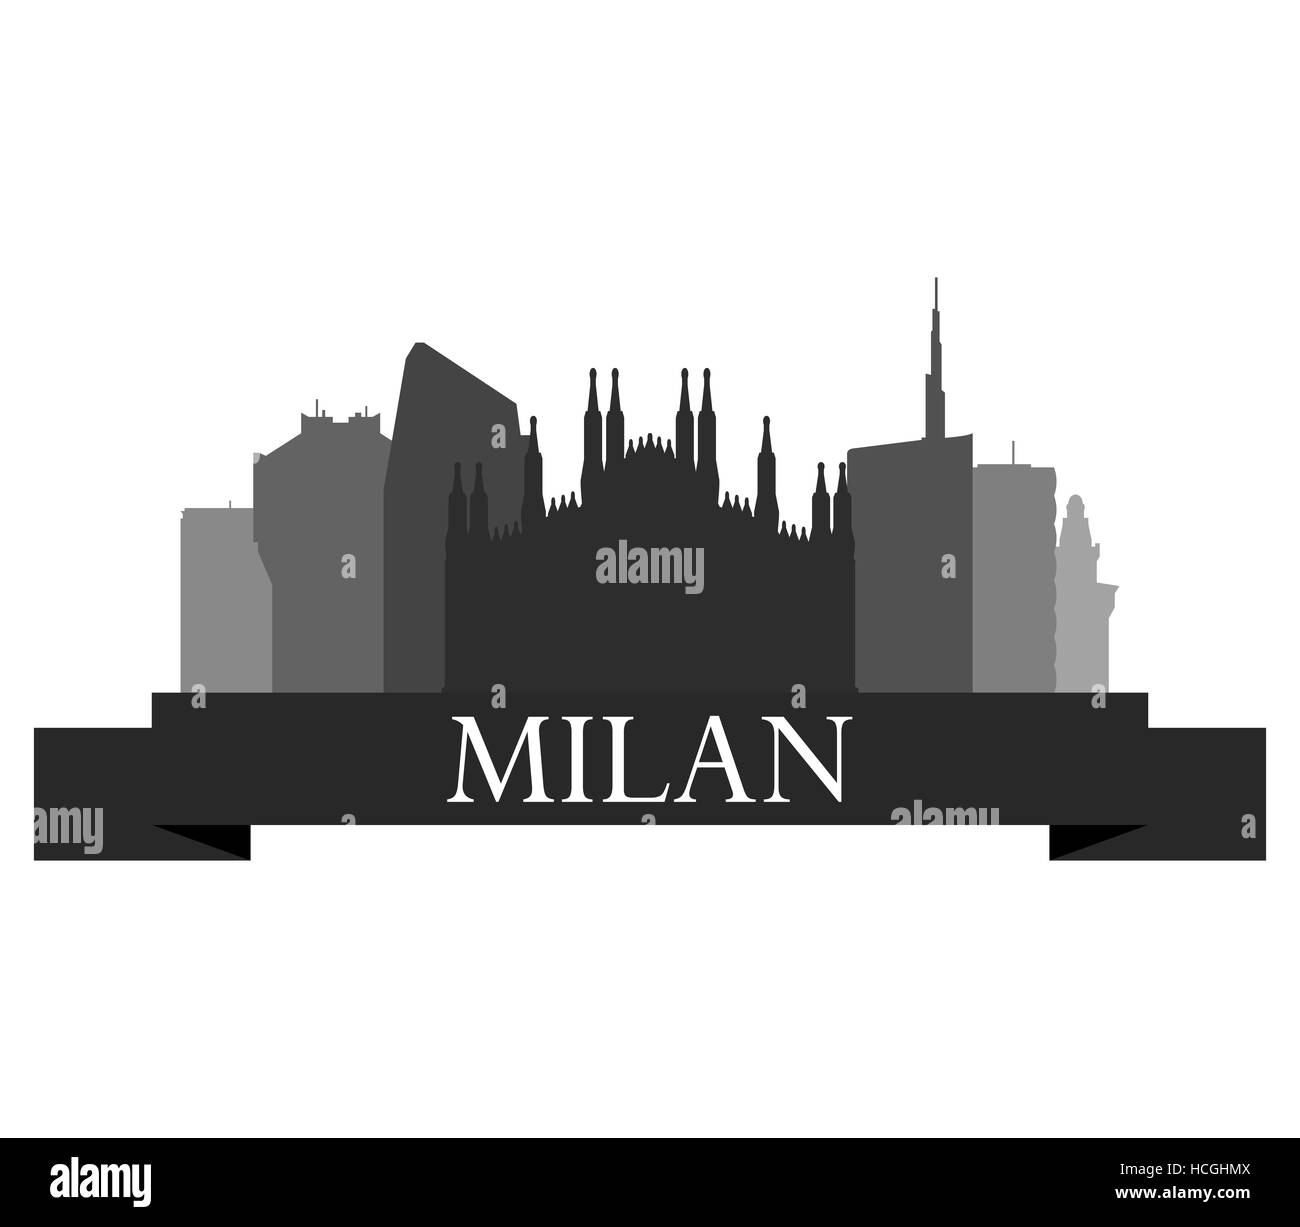 milan skyline Stock Photo